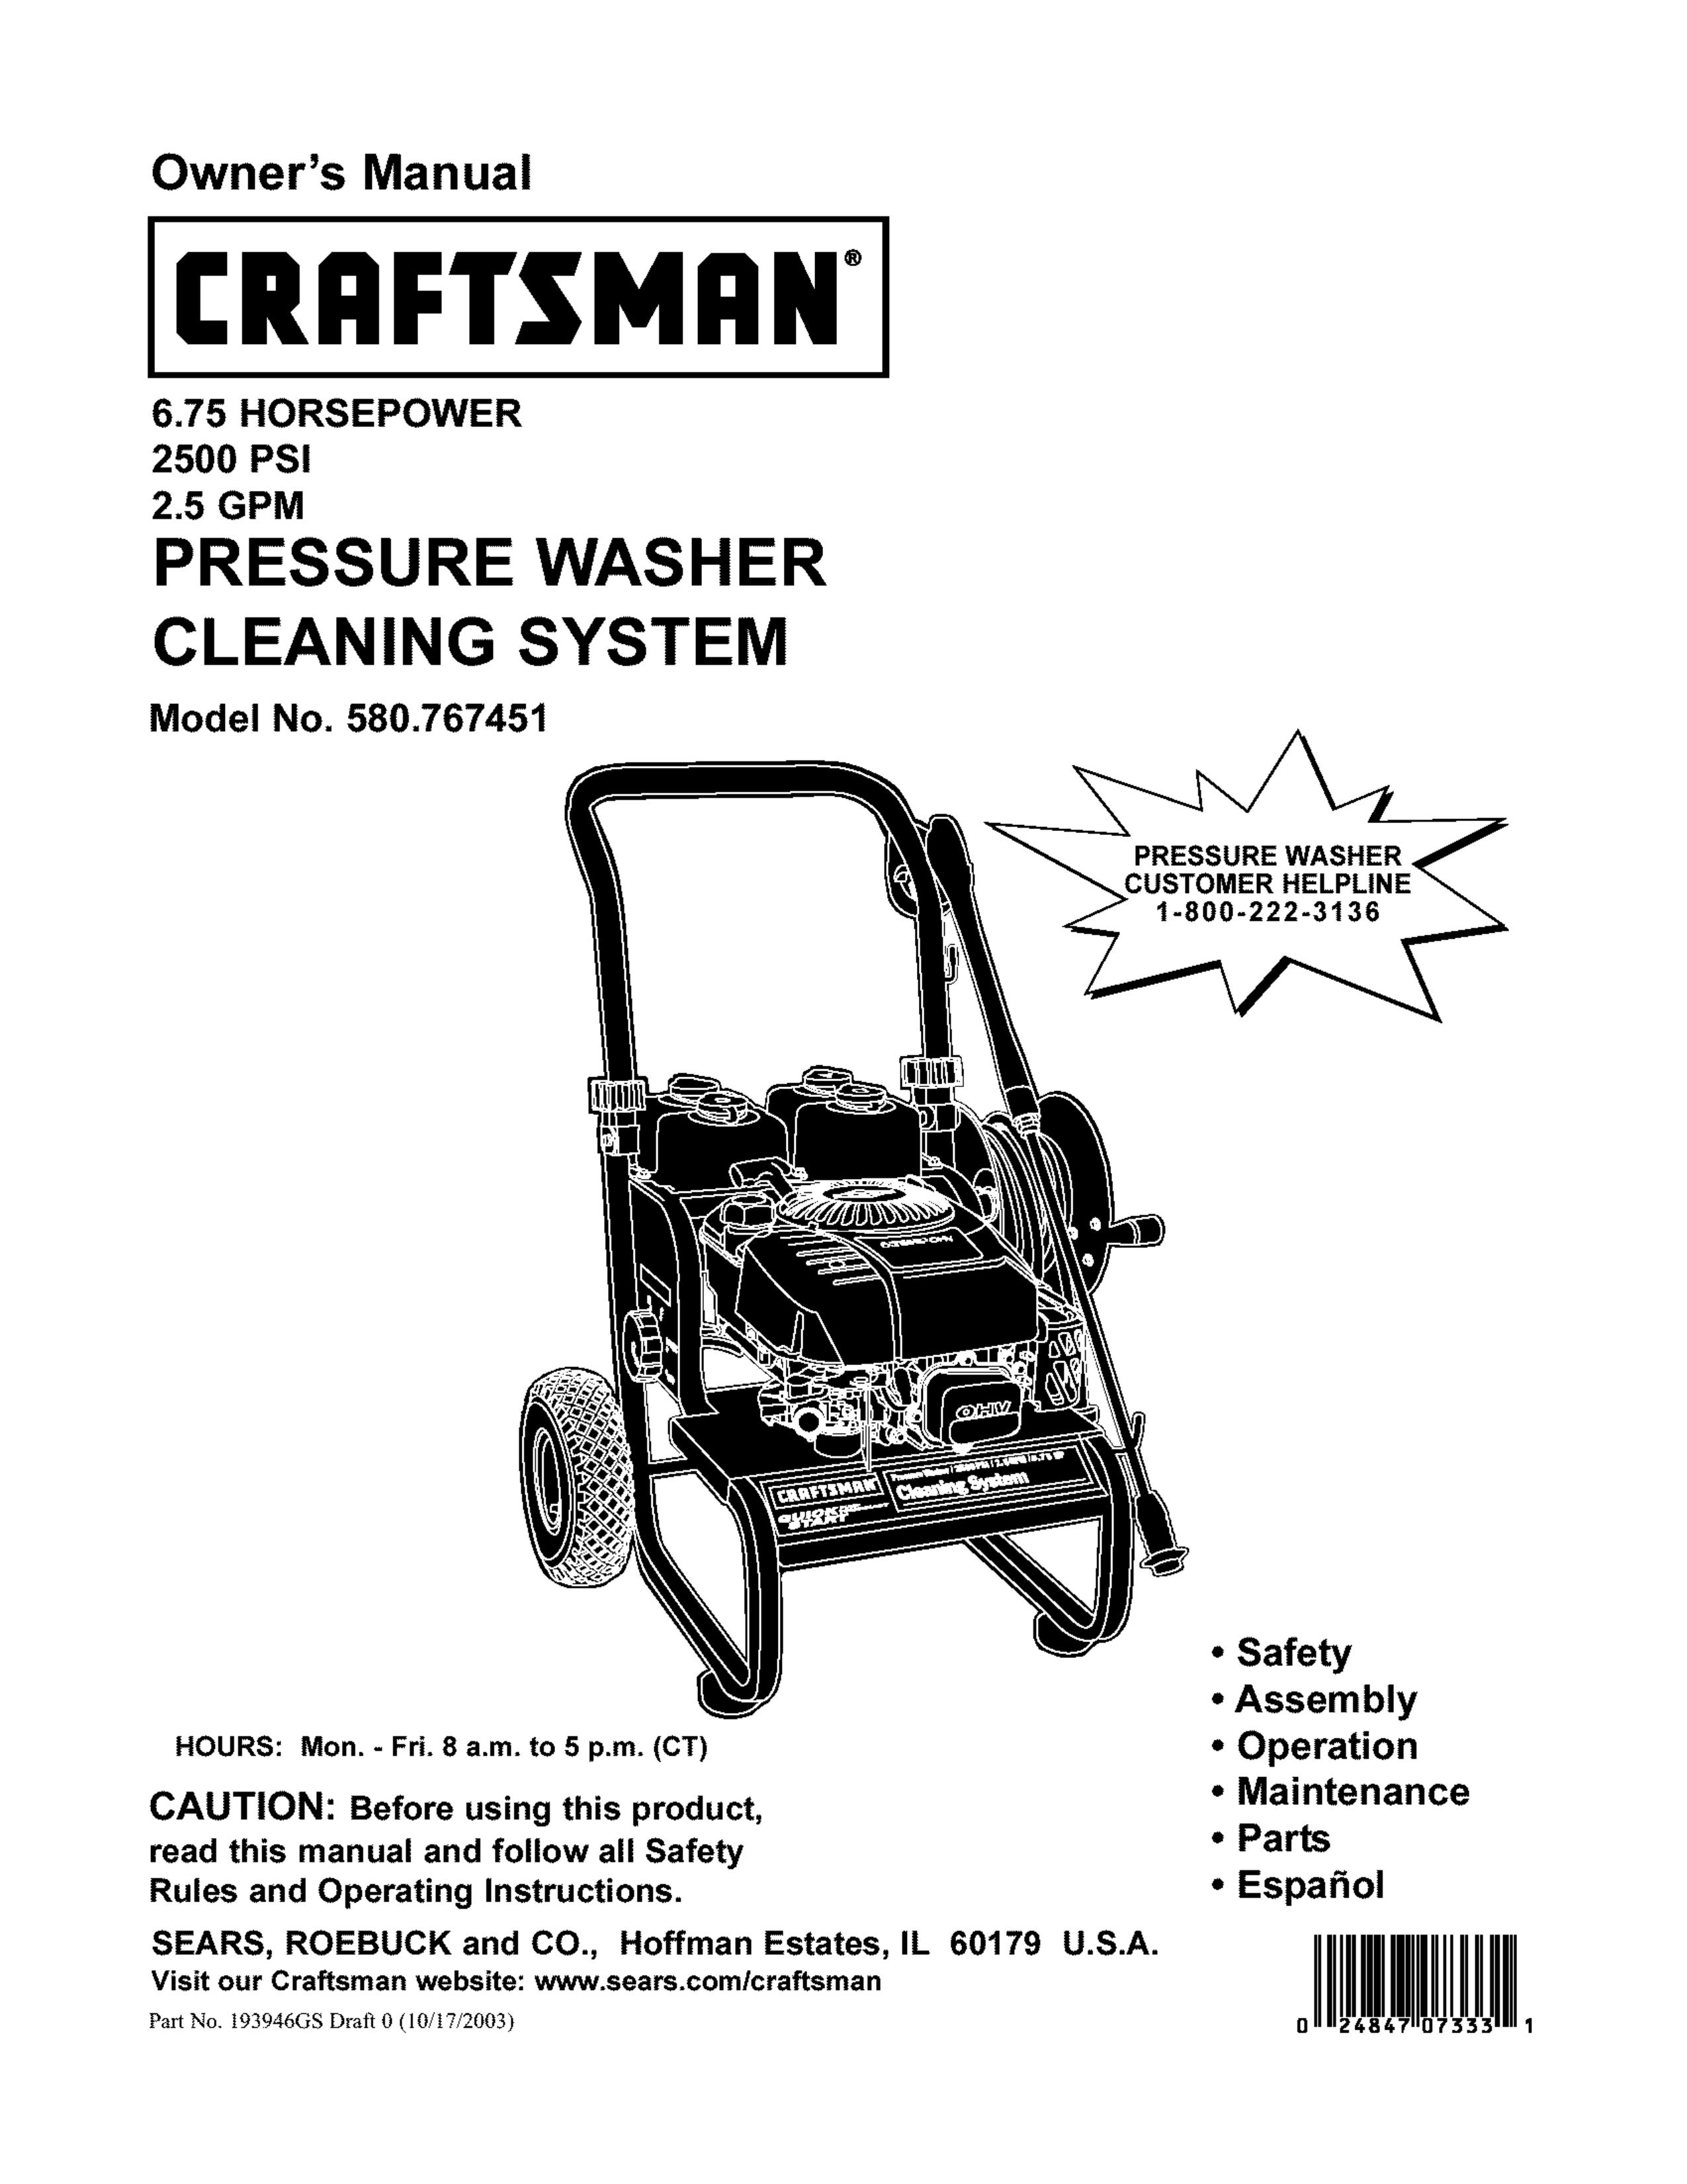 Craftsman 580.767451 Pressure Washer User Manual